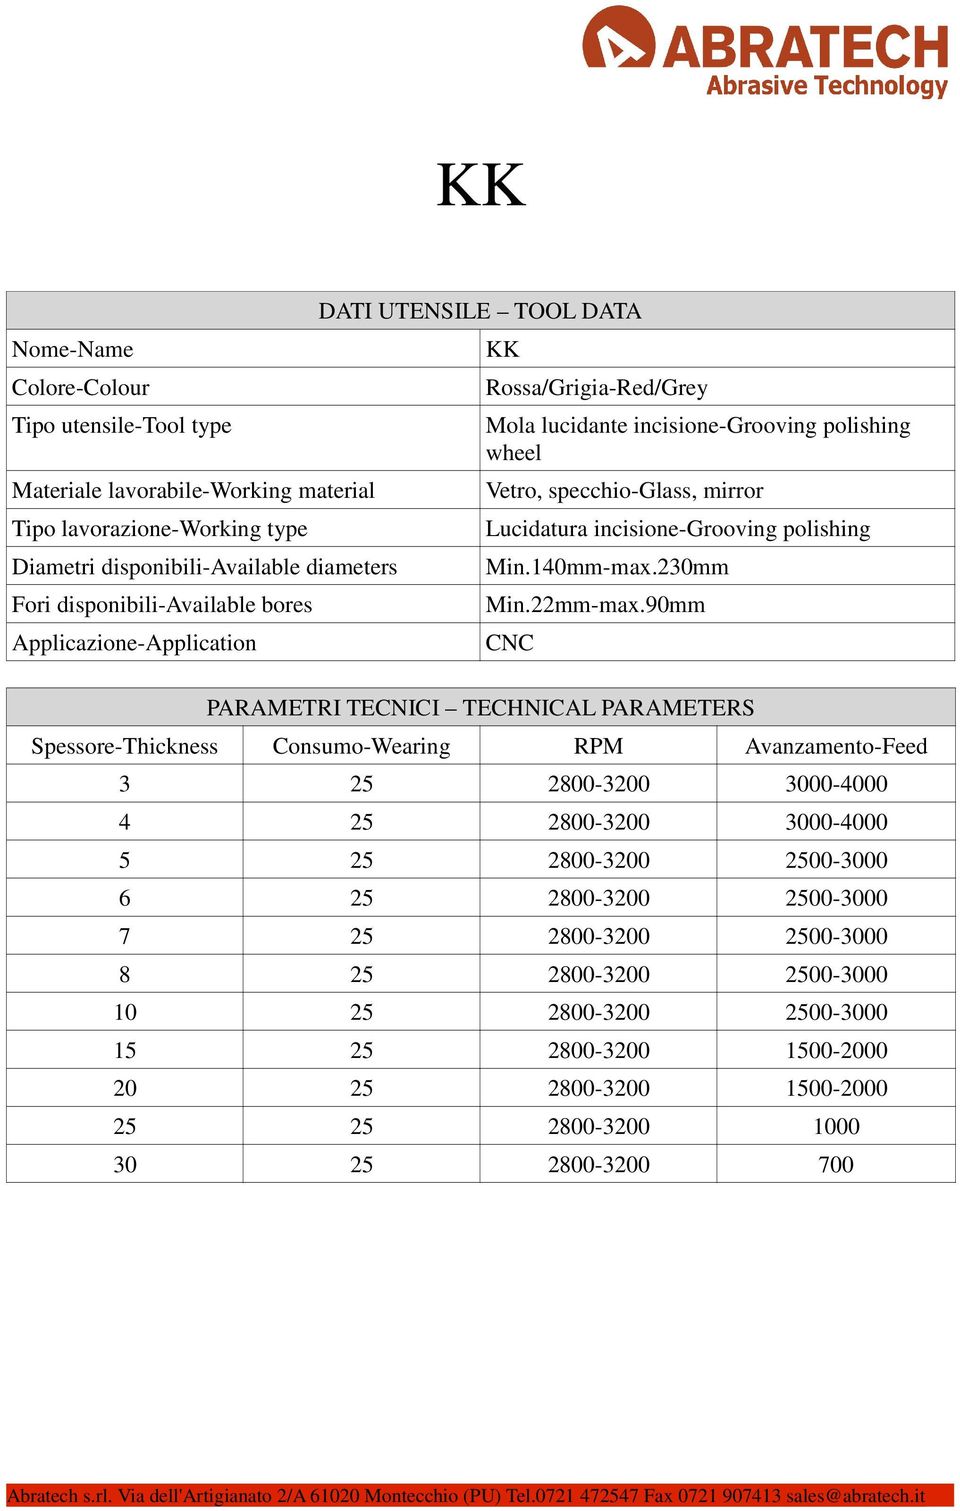 90mm CNC PARAMETRI TECNICI TECHNICAL PARAMETERS Spessore-Thickness Consumo-Wearing RPM Avanzamento-Feed 3 25 2800-3200 3000-4000 4 25 2800-3200 3000-4000 5 25